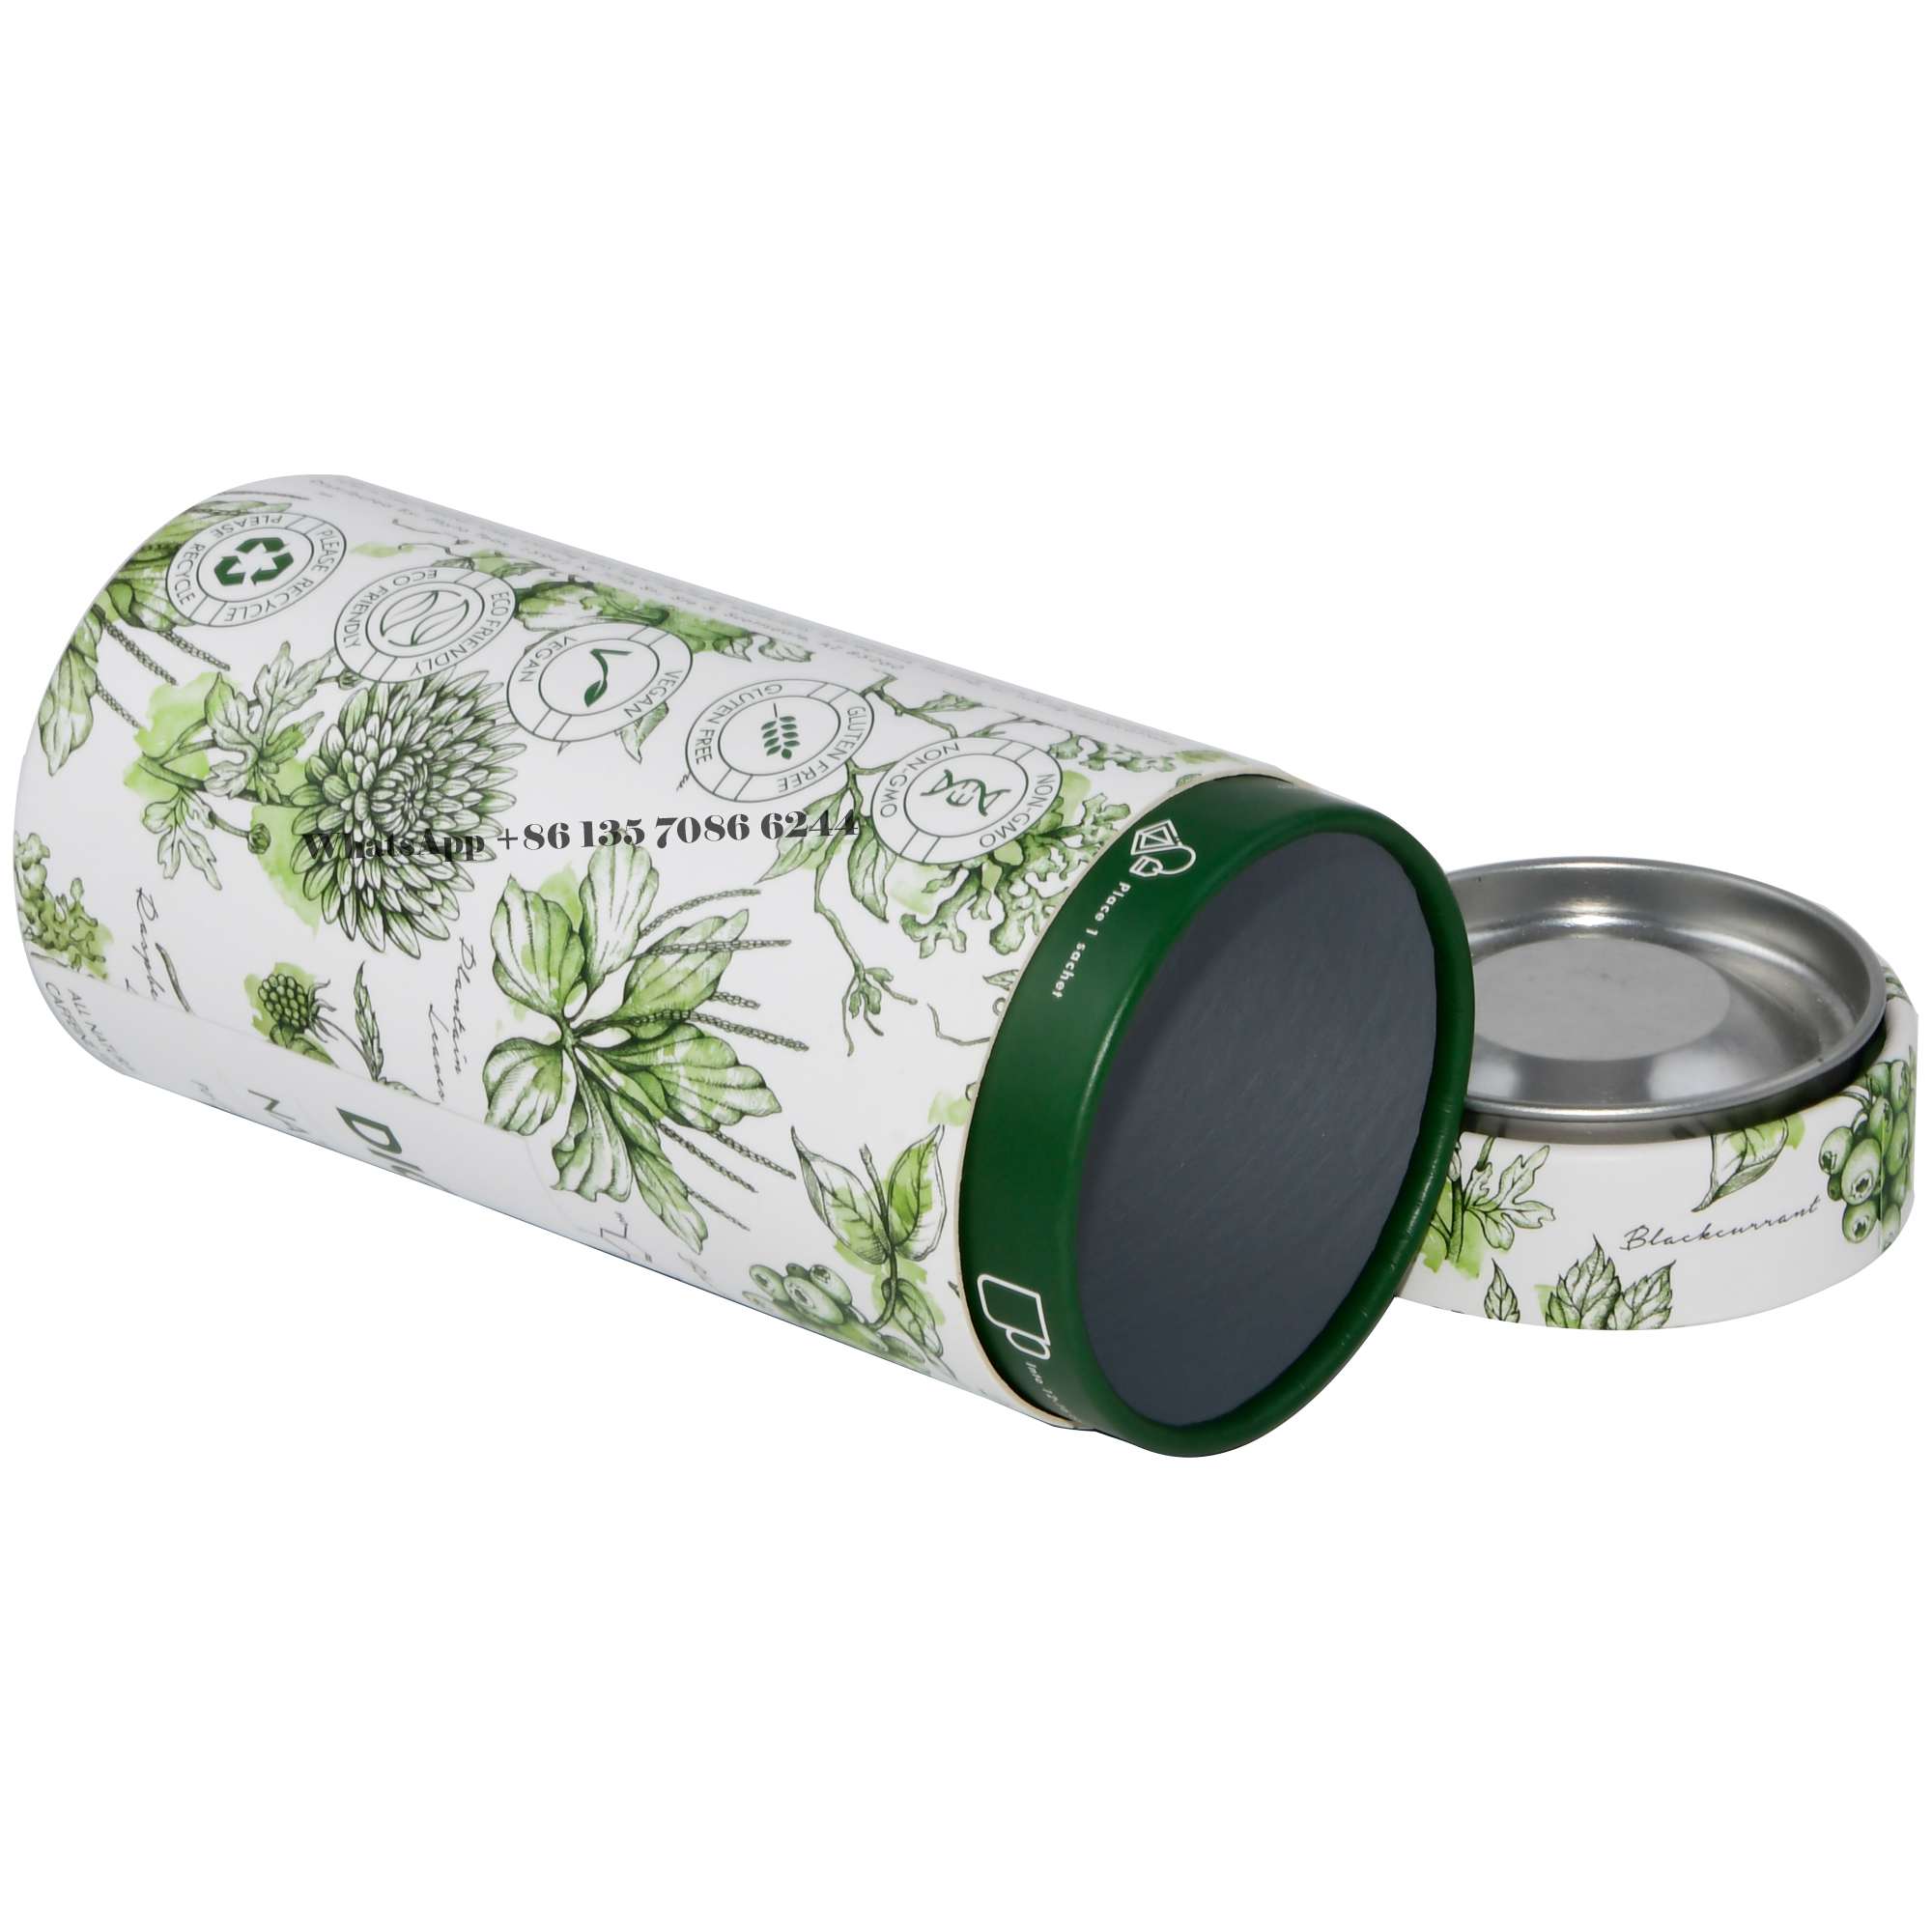  Caja redonda de embalaje de tubo de papel para un té blend exquisito y elegante  